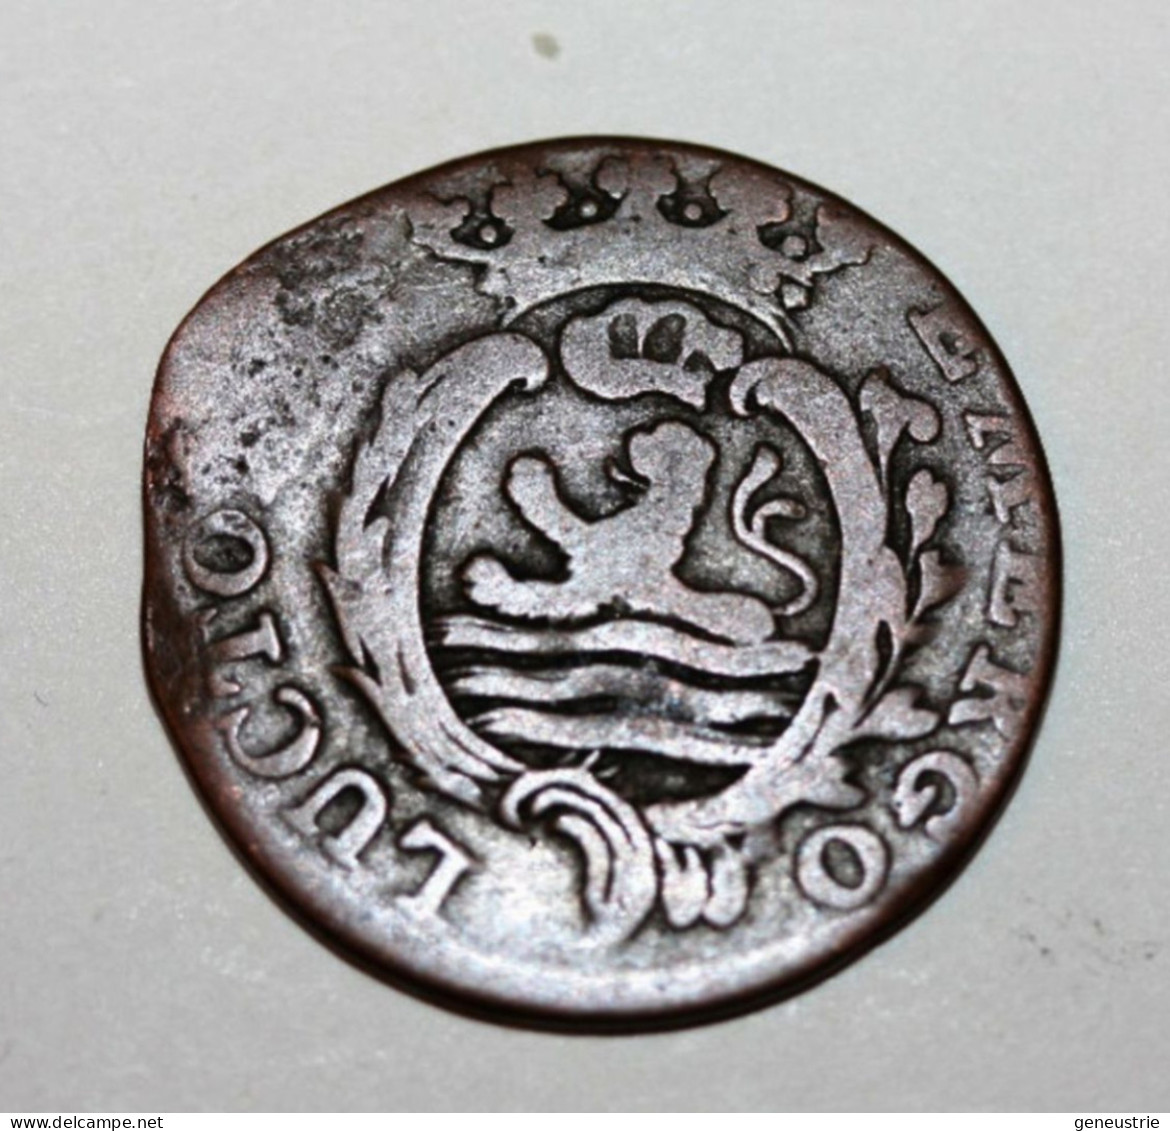 Monnaie De Zelande - Netherlands Repub. - Duit Zelandia 1786 - Pays-Bas - Hollande - …-1795 : Former Period